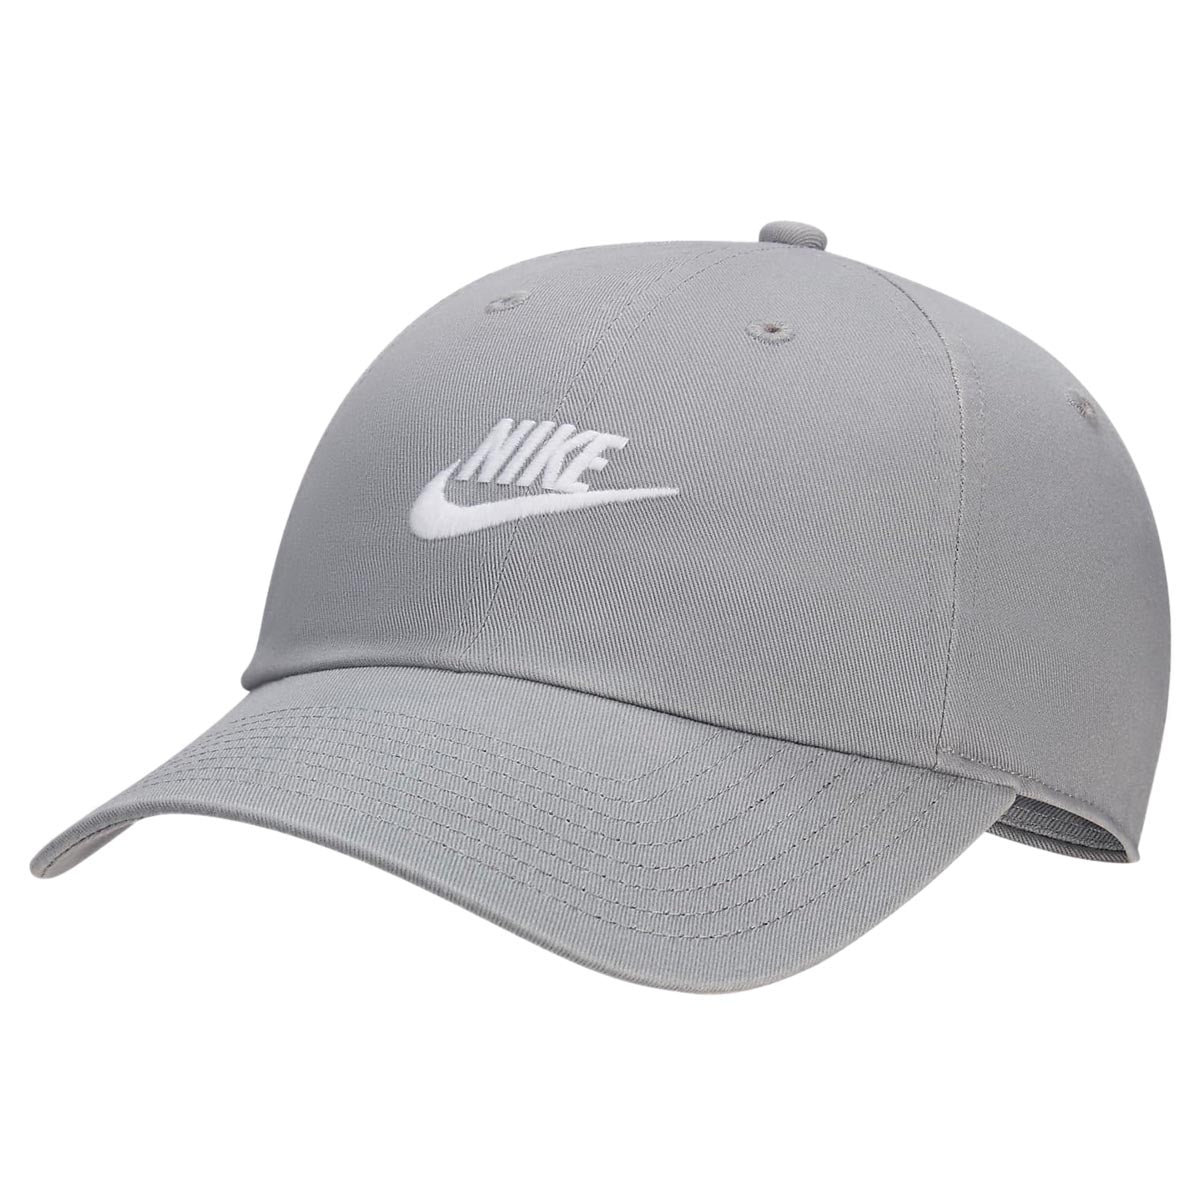 Nike SB Futbol Club Hat - Particle Grey/White - MD/LG image 1